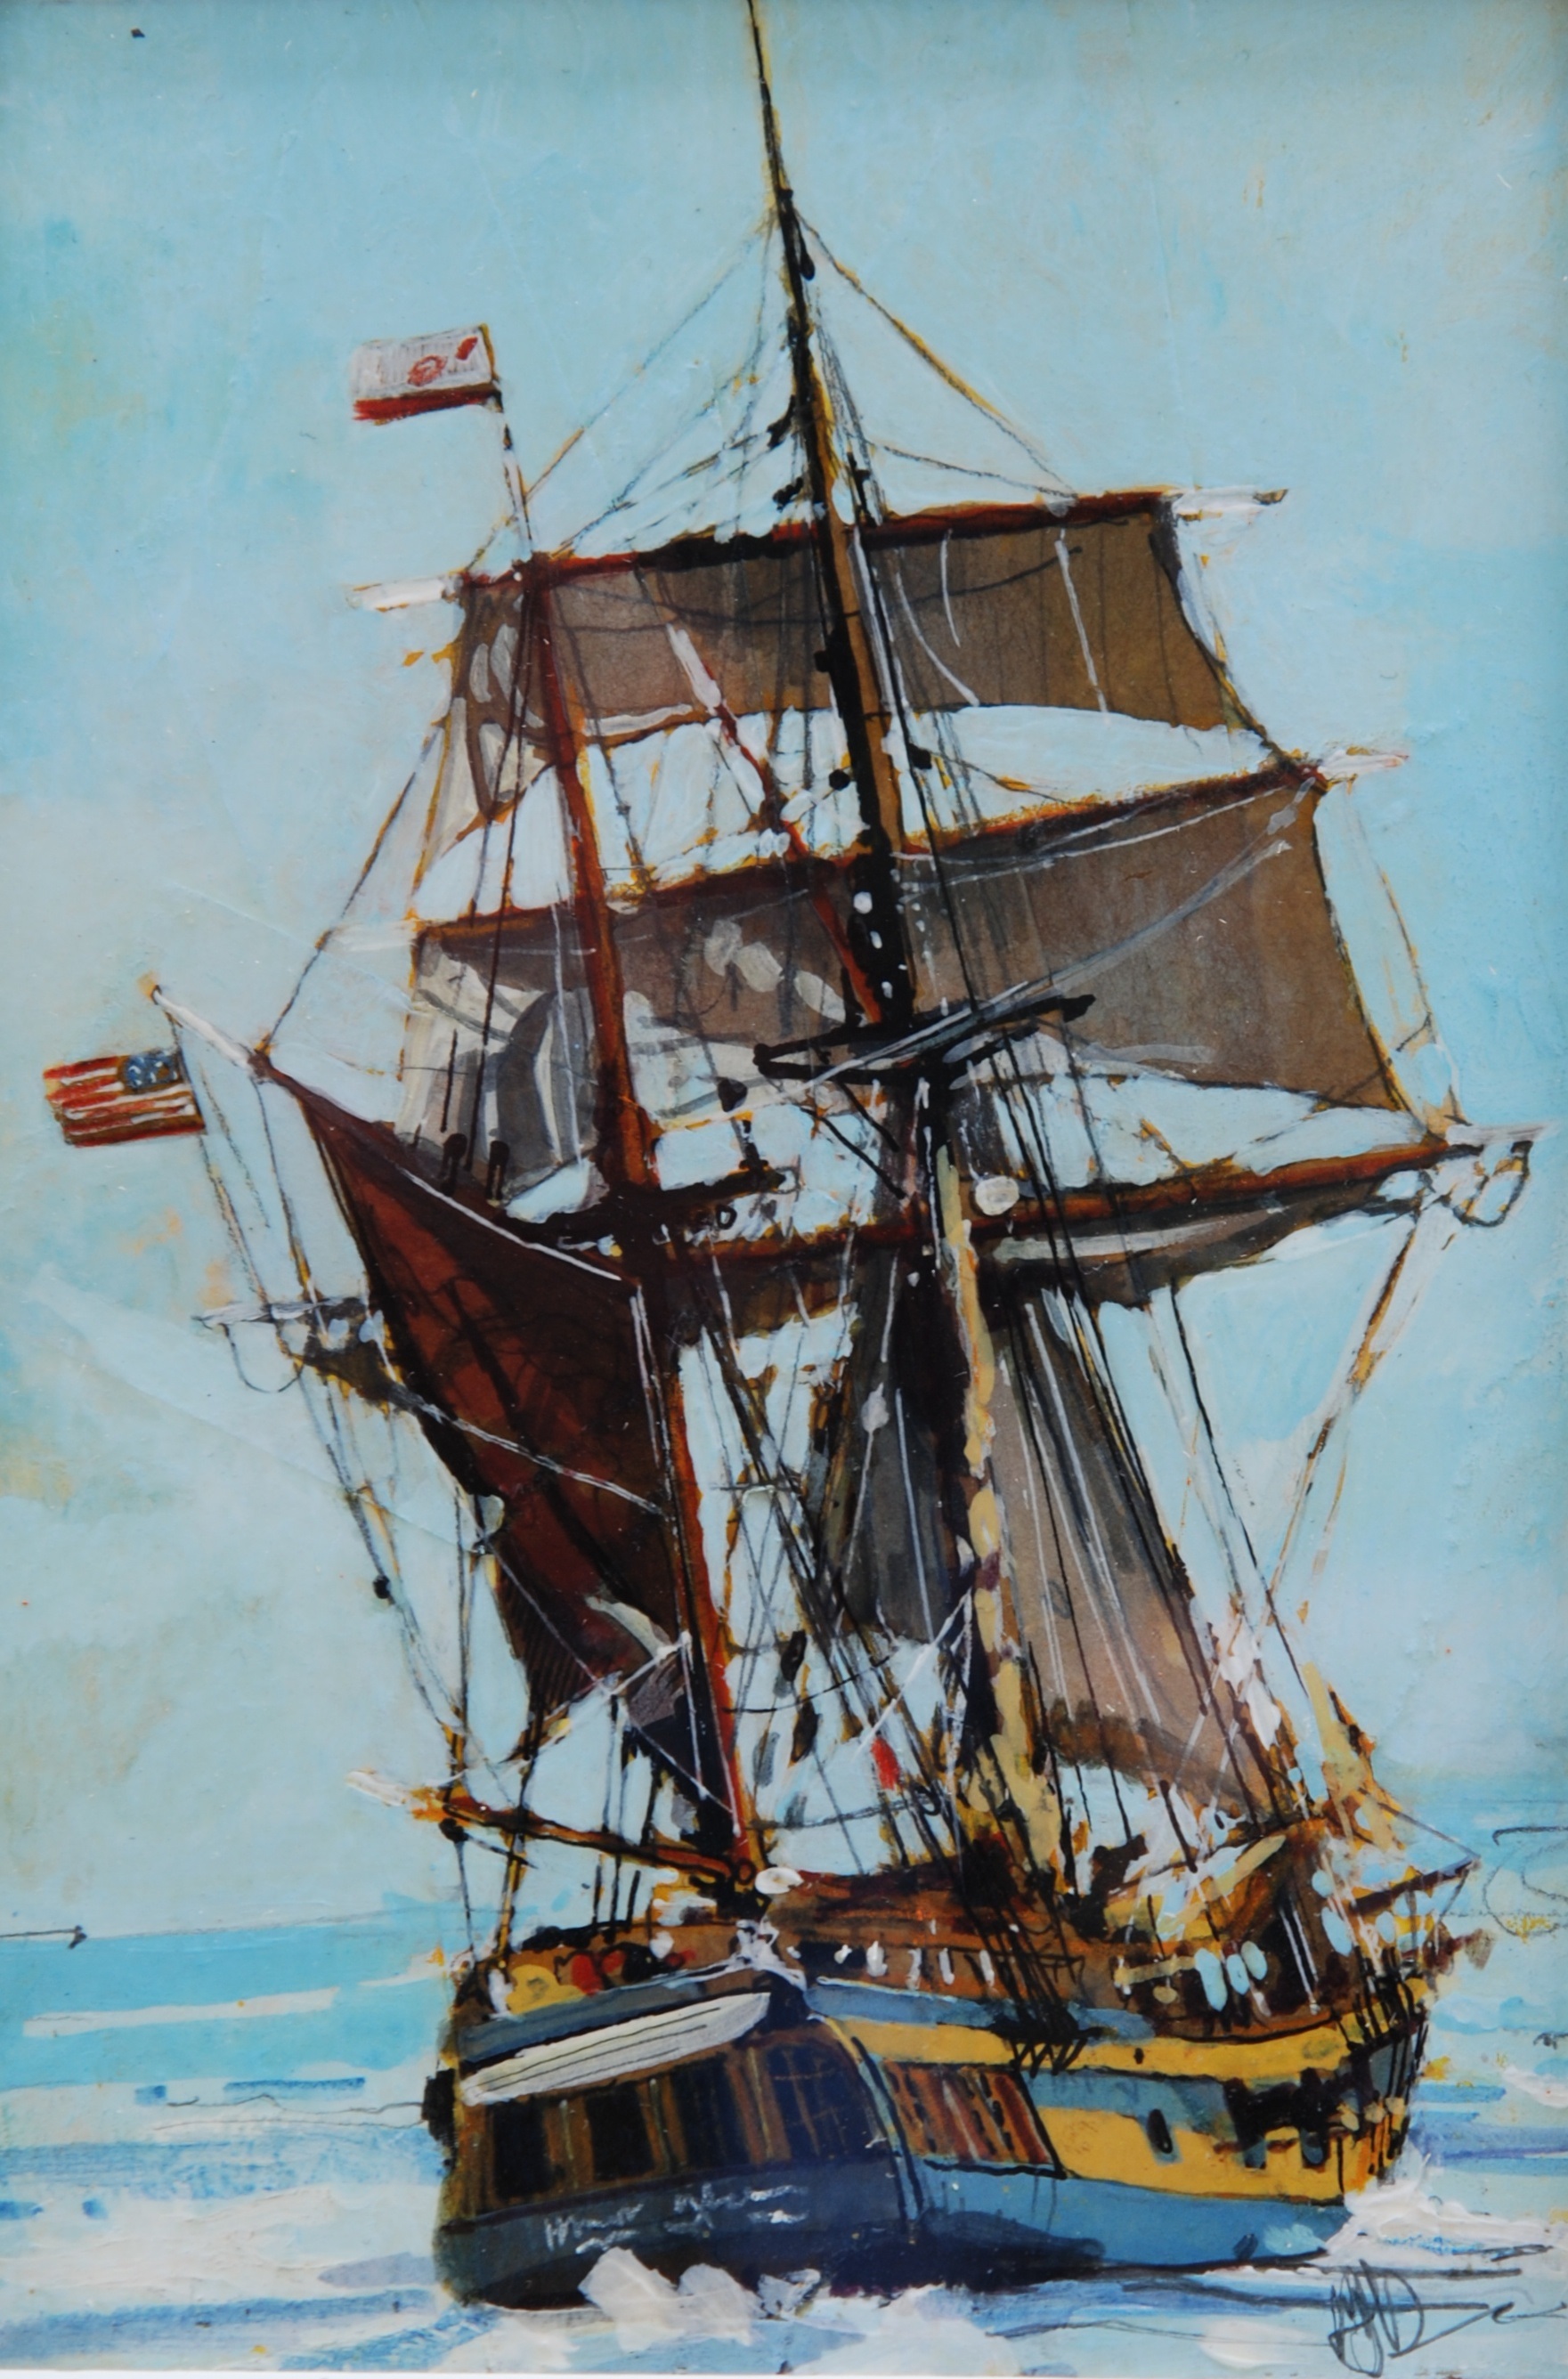 'Ship at Sea' by artist Malcolm Cheape